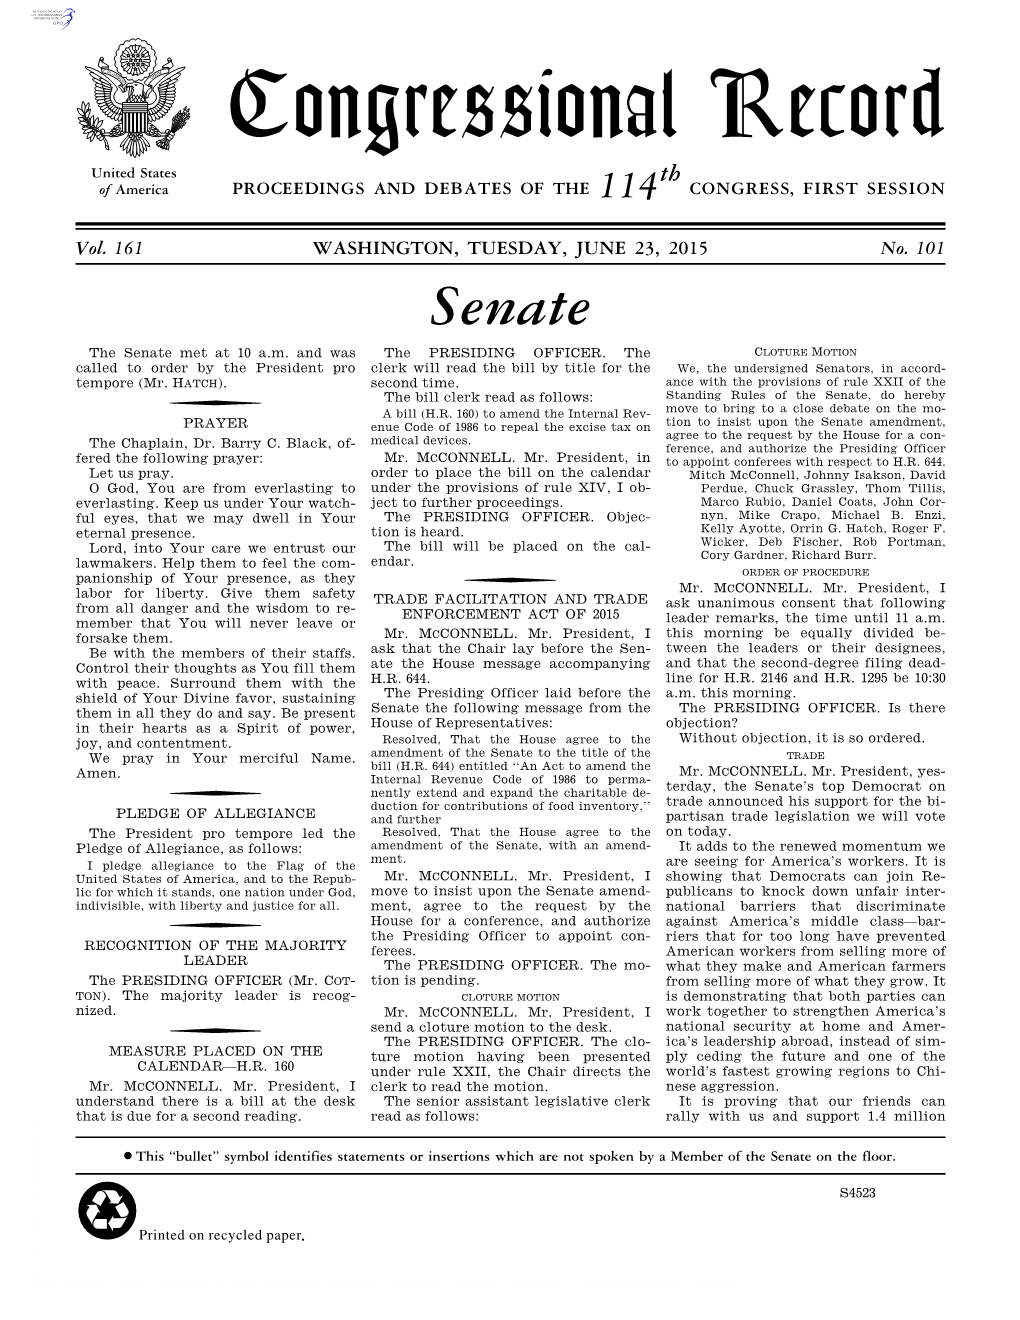 Senate Section